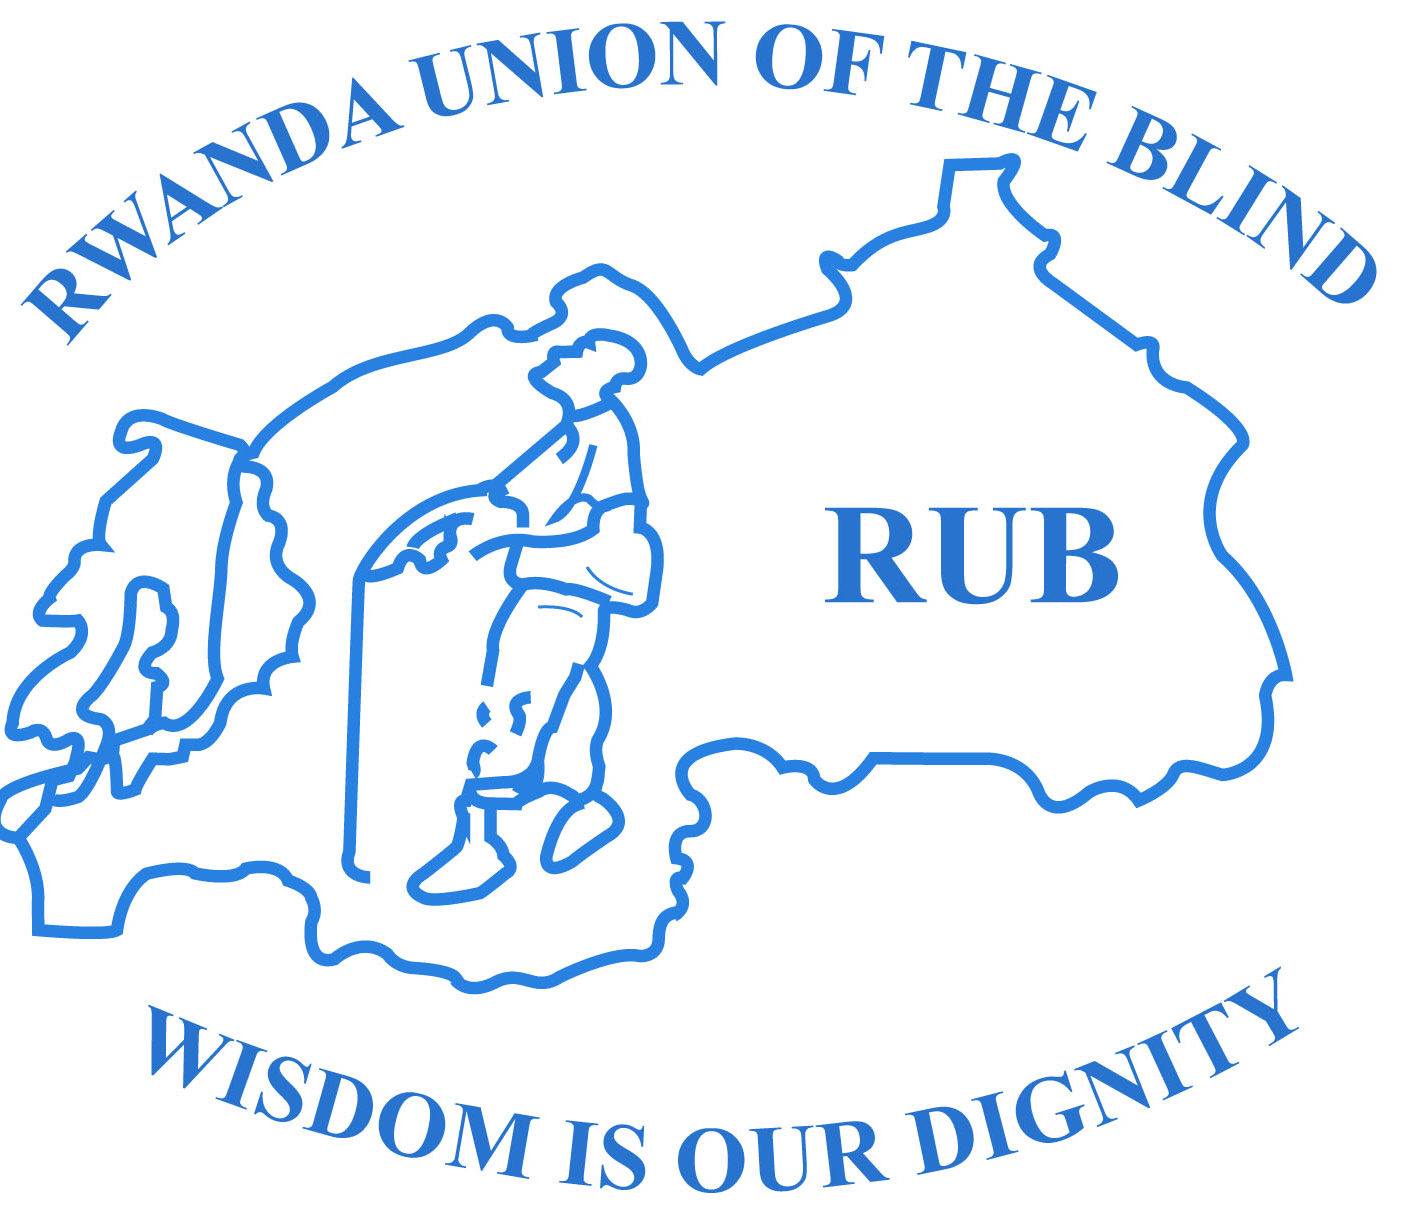 RWANDA UNION OF THE BLIND